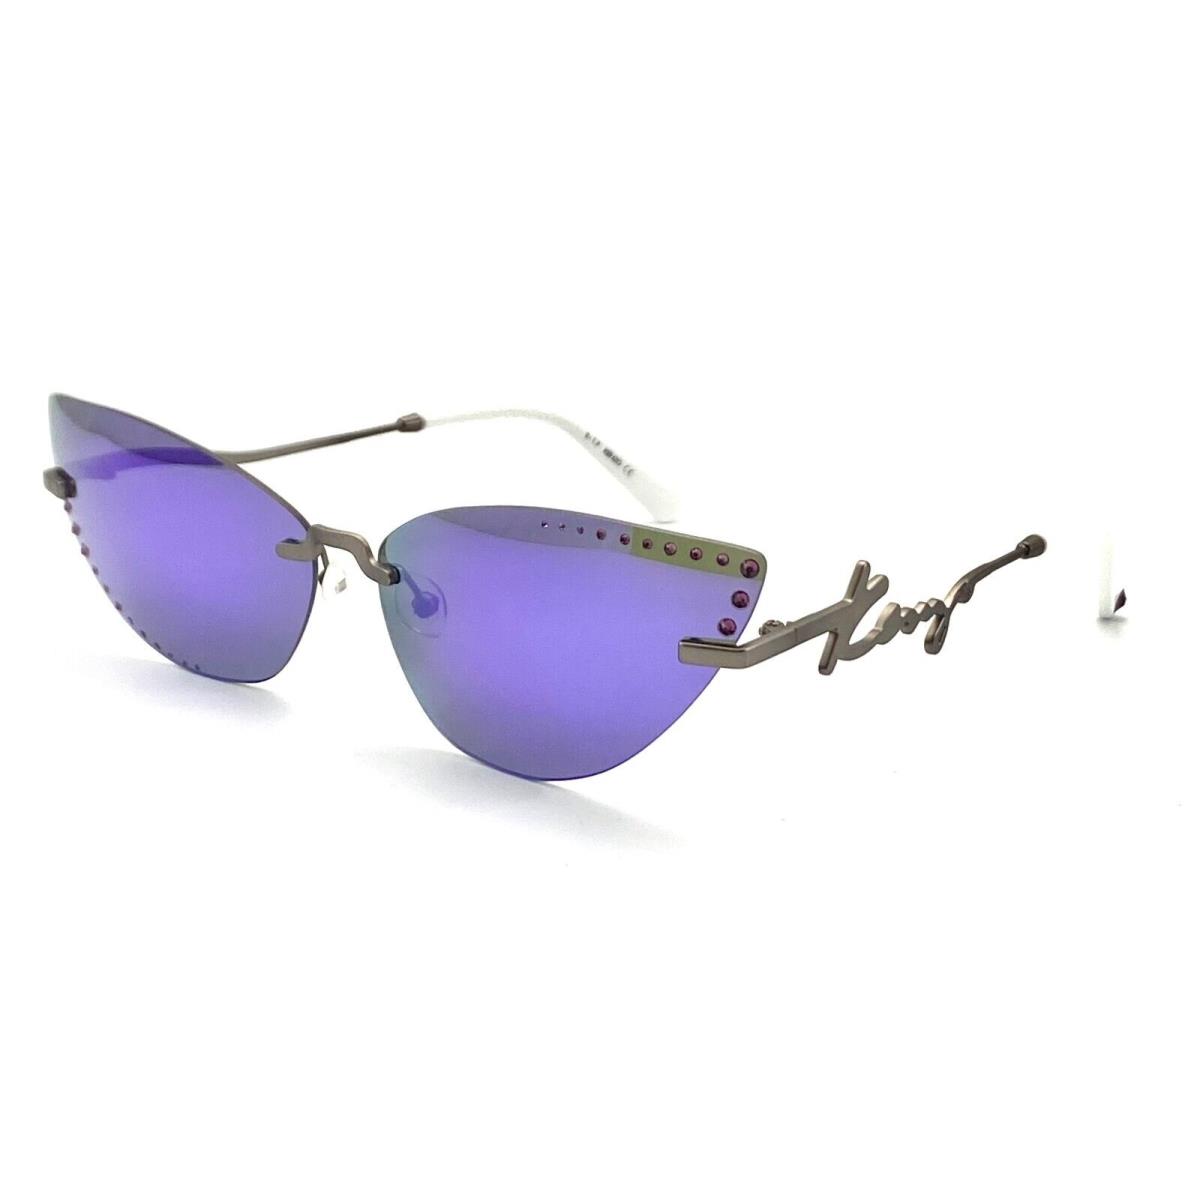 Kenzo Paris KZ40004U 13Z Silver Sunglasses 67-14 140 W/case - Silver Frame, Purple Lens